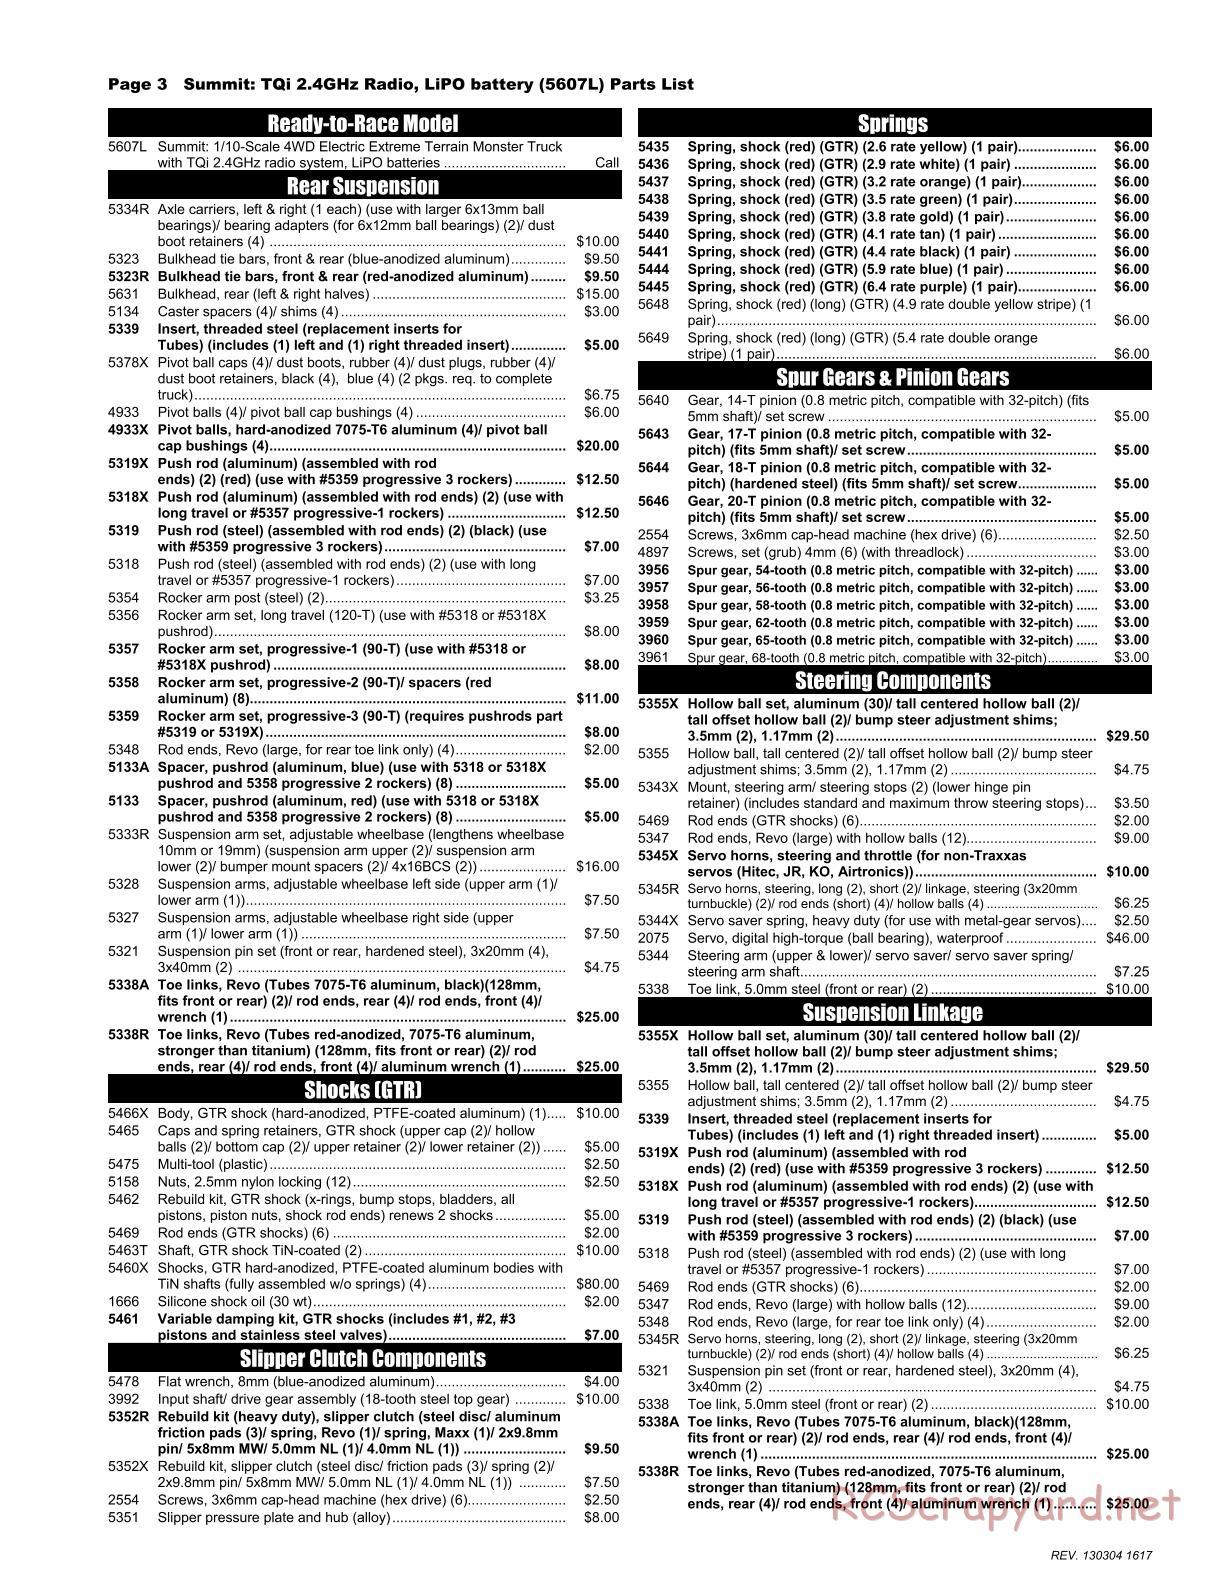 Traxxas - Summit LiPo (2012) - Parts List - Page 3